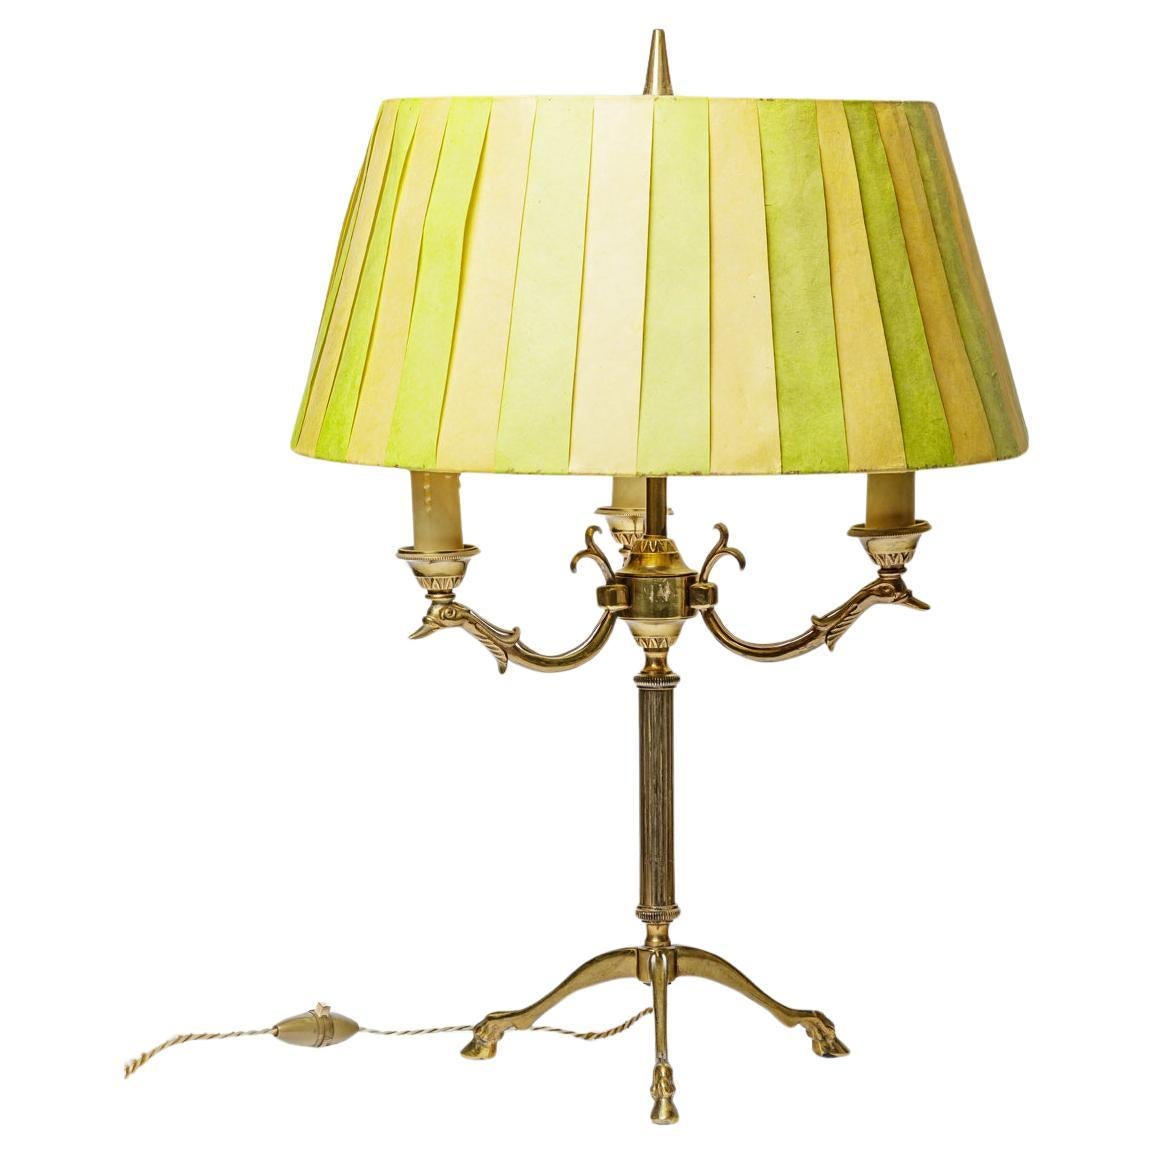 20th century design golden brass animals table lamp by Maison Jansen 1970 For Sale